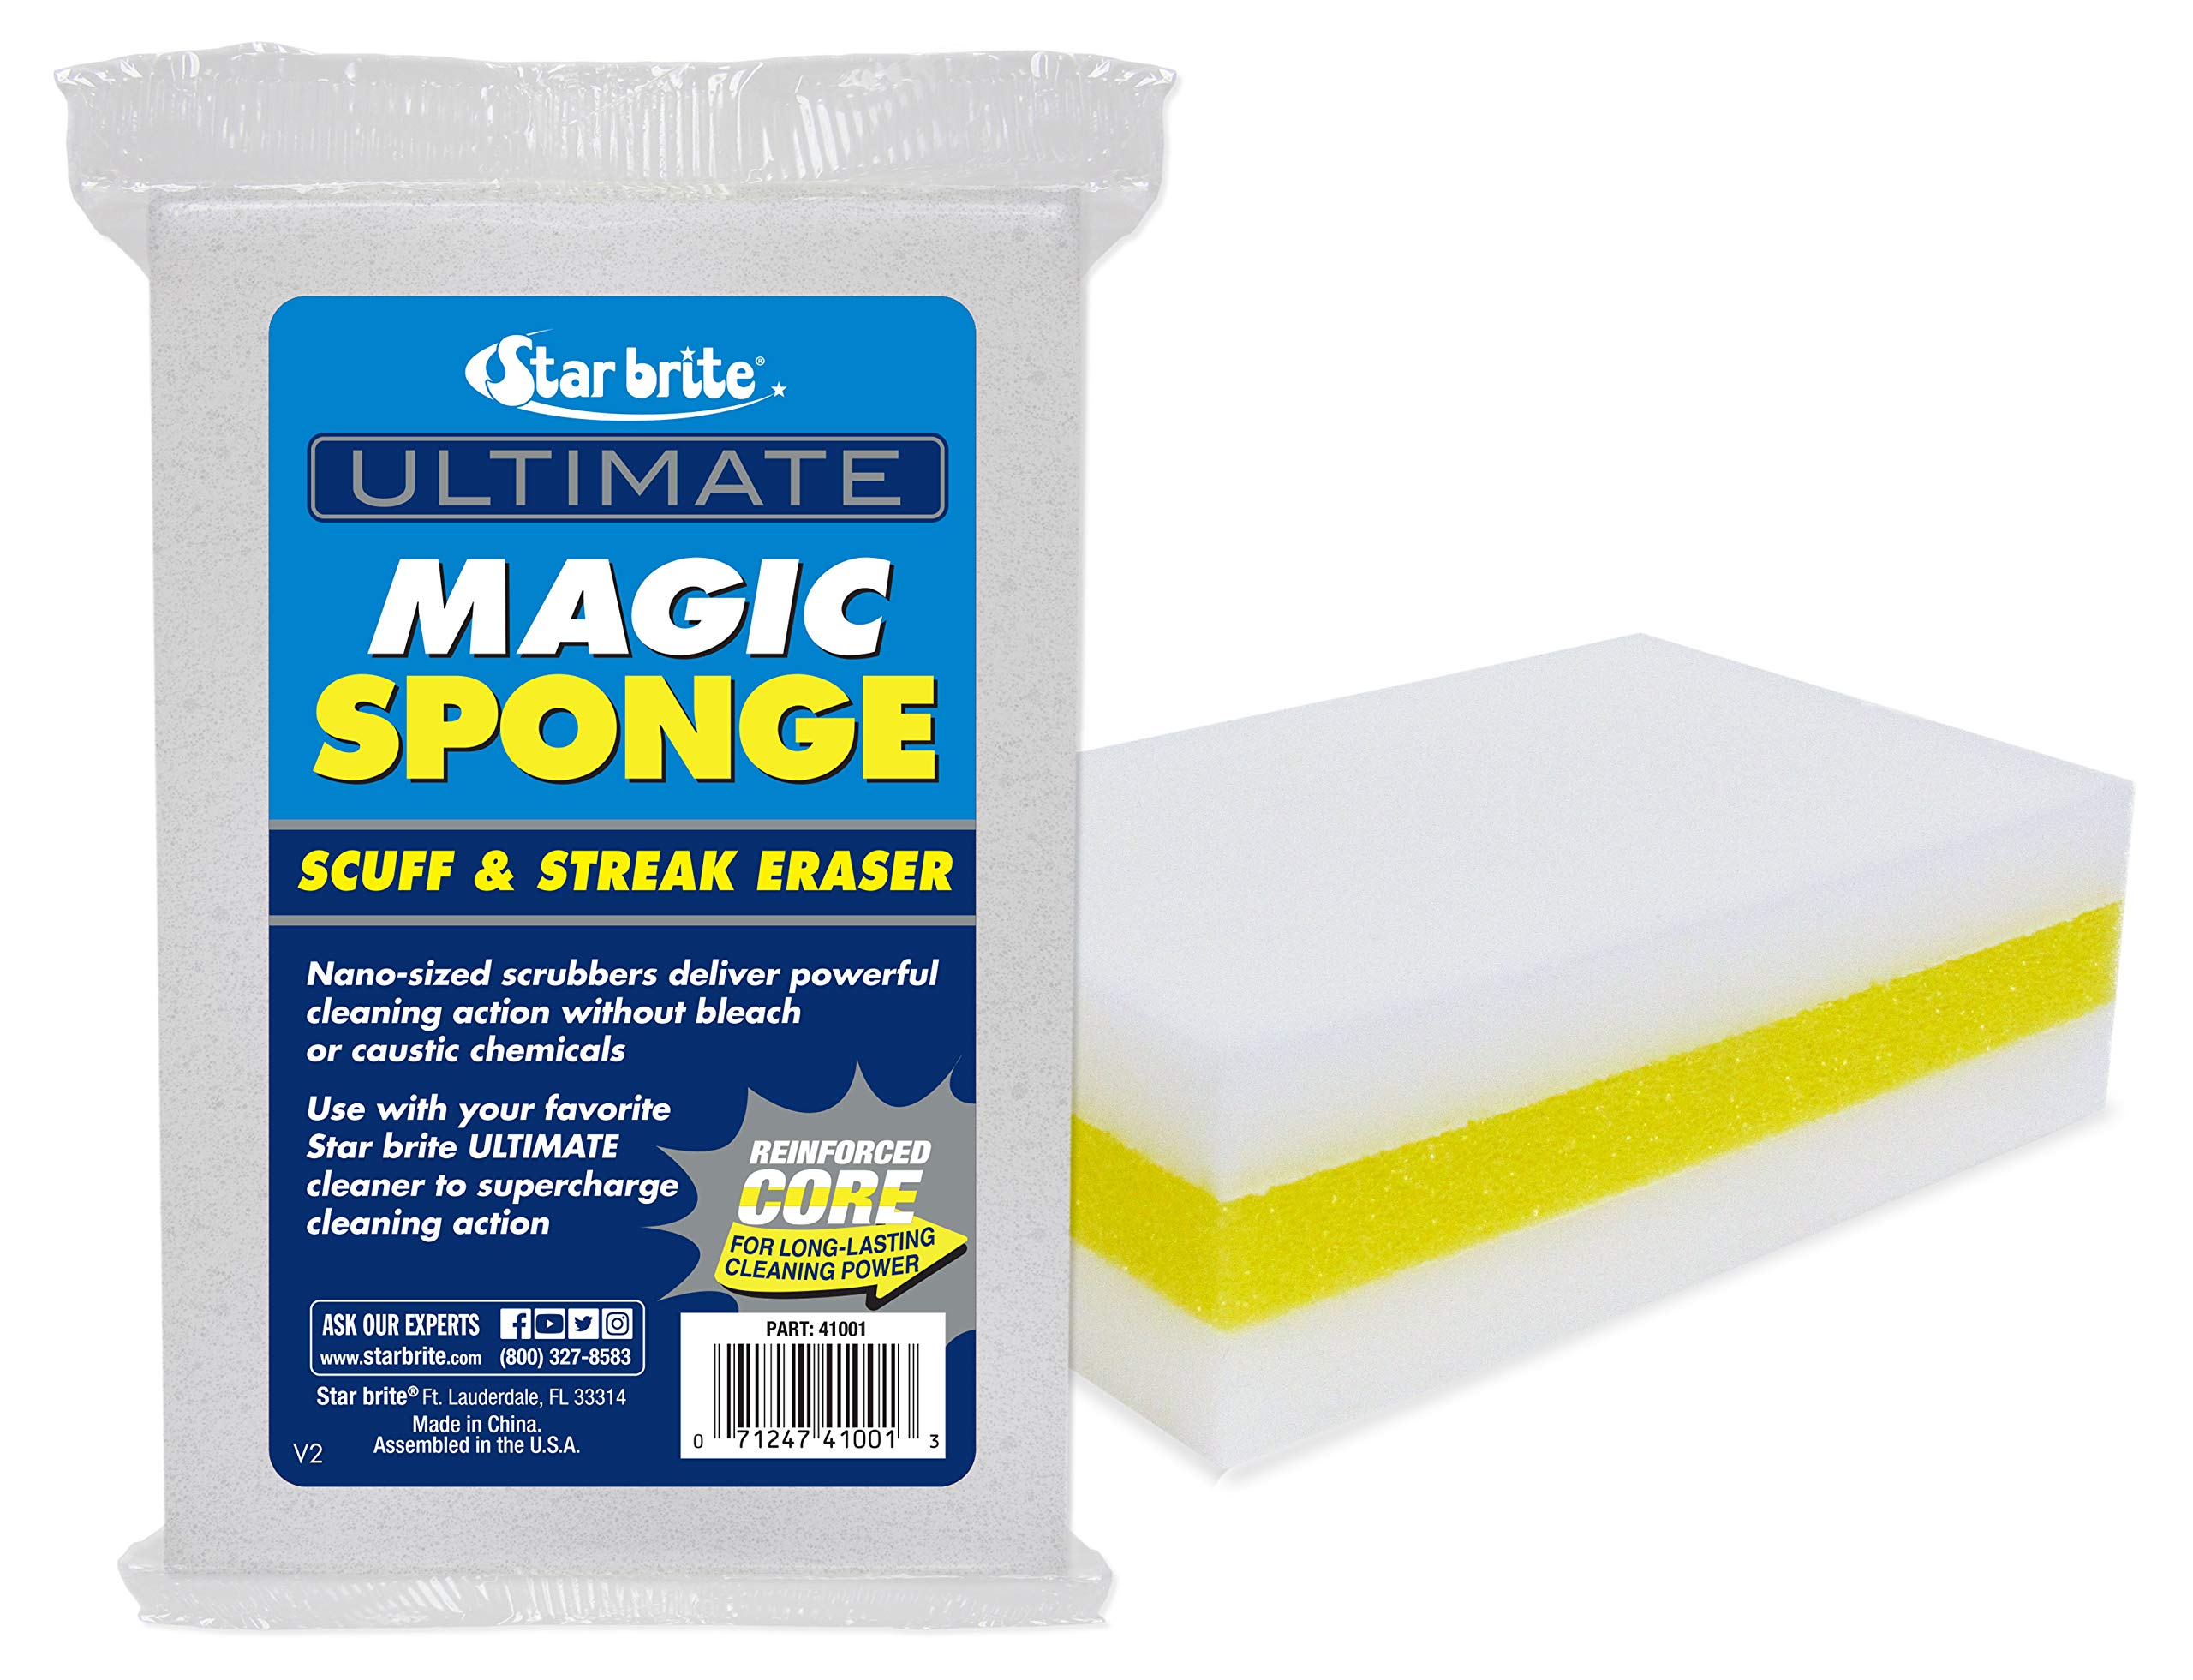 STAR BRITE Ultimate Magic Sponge - Boat Scuff Eraser Melamine Scrubber with Reinforced Core - 2 Pack (041000), White